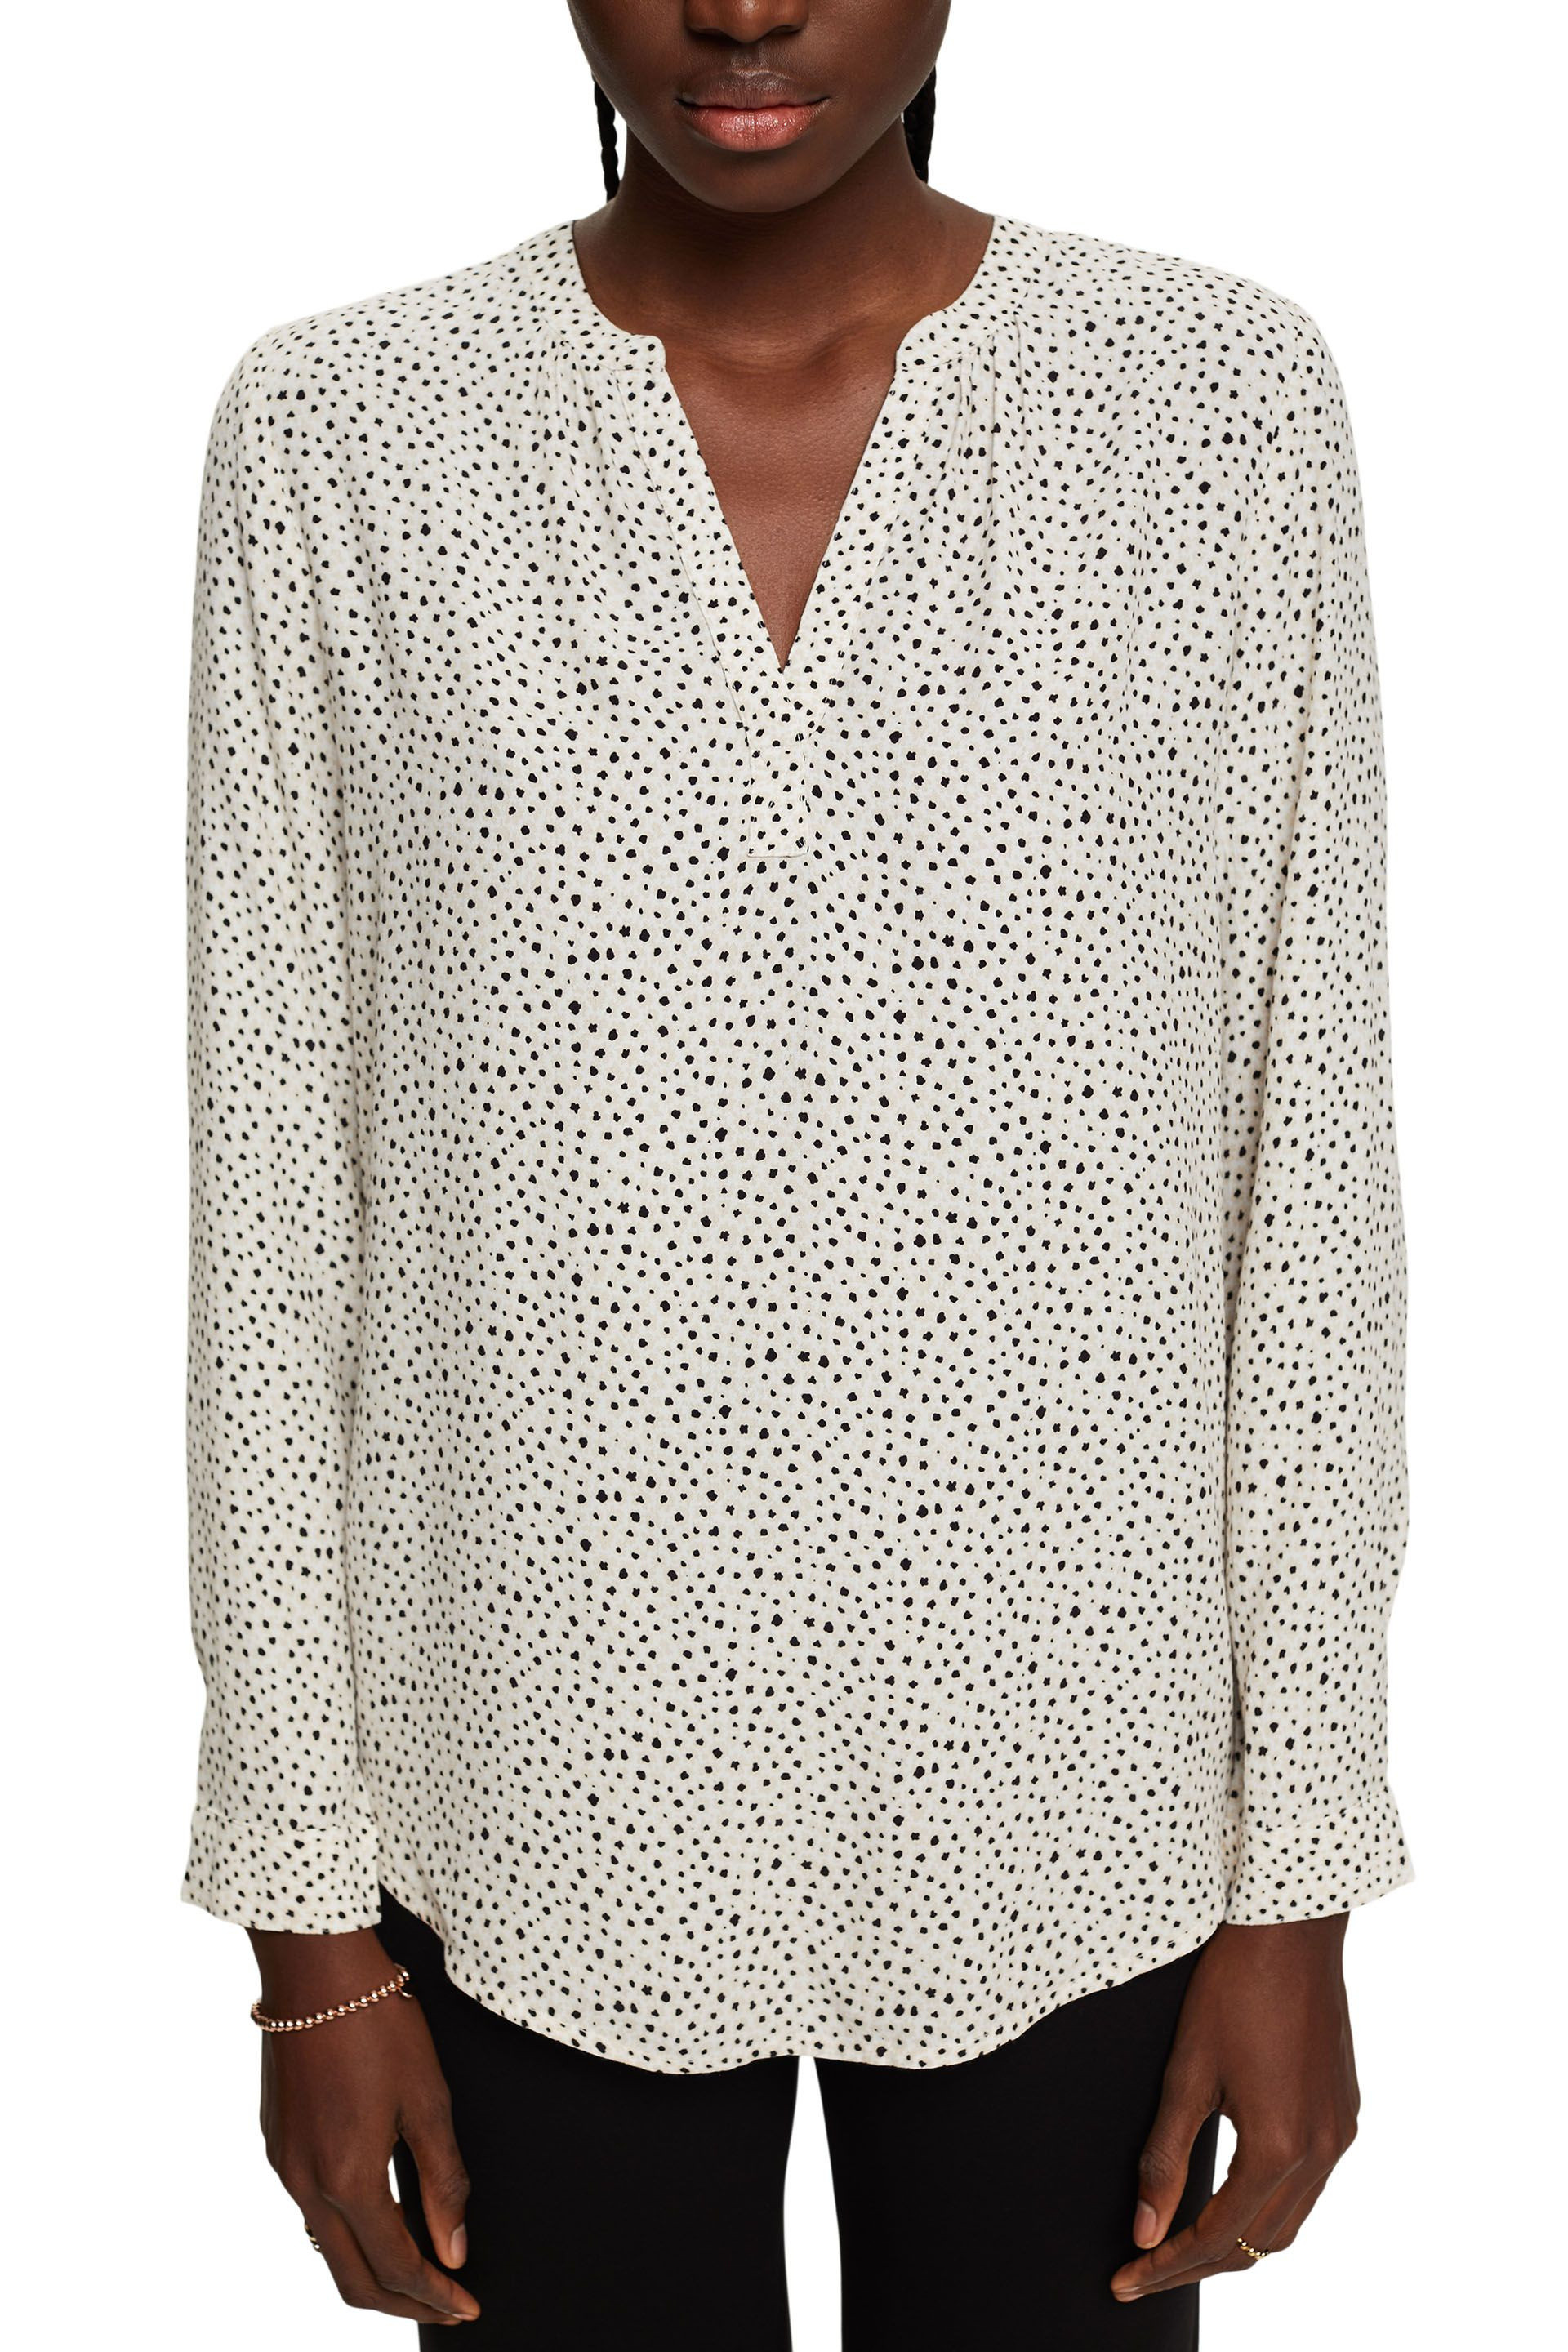 Esprit - Patterned blouse, White, large image number 1